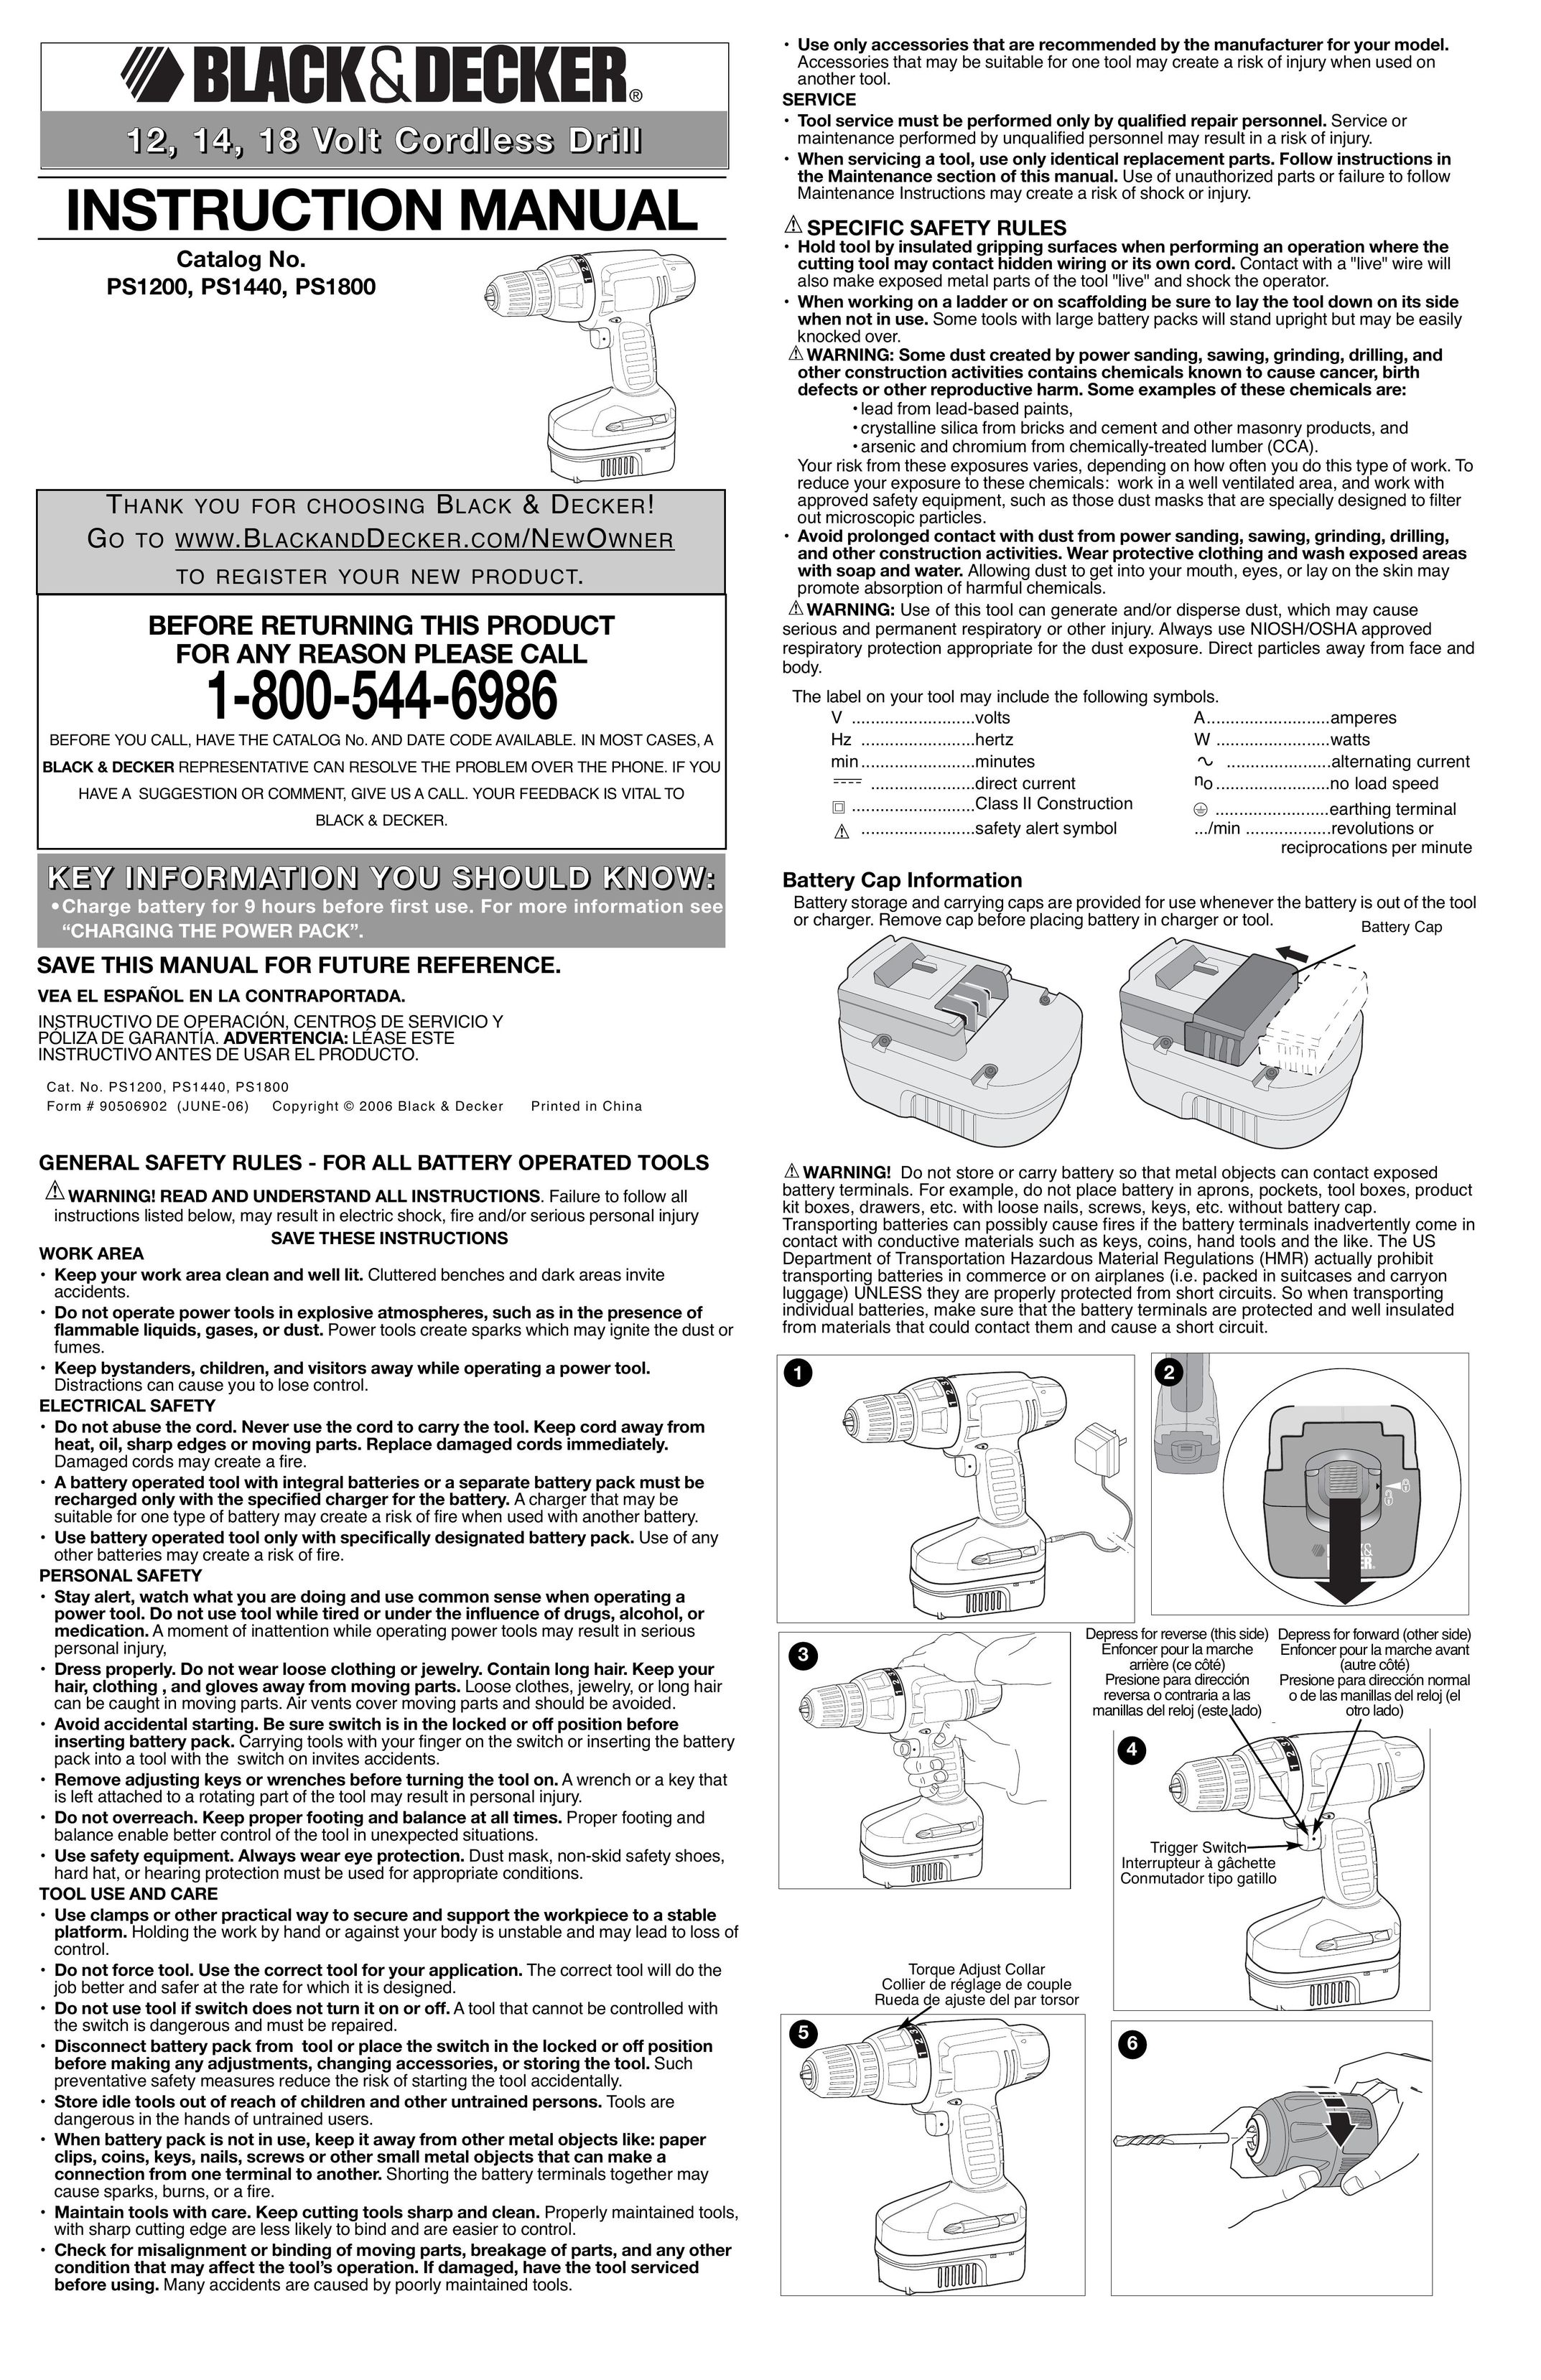 Black & Decker 90506902 Cordless Drill User Manual